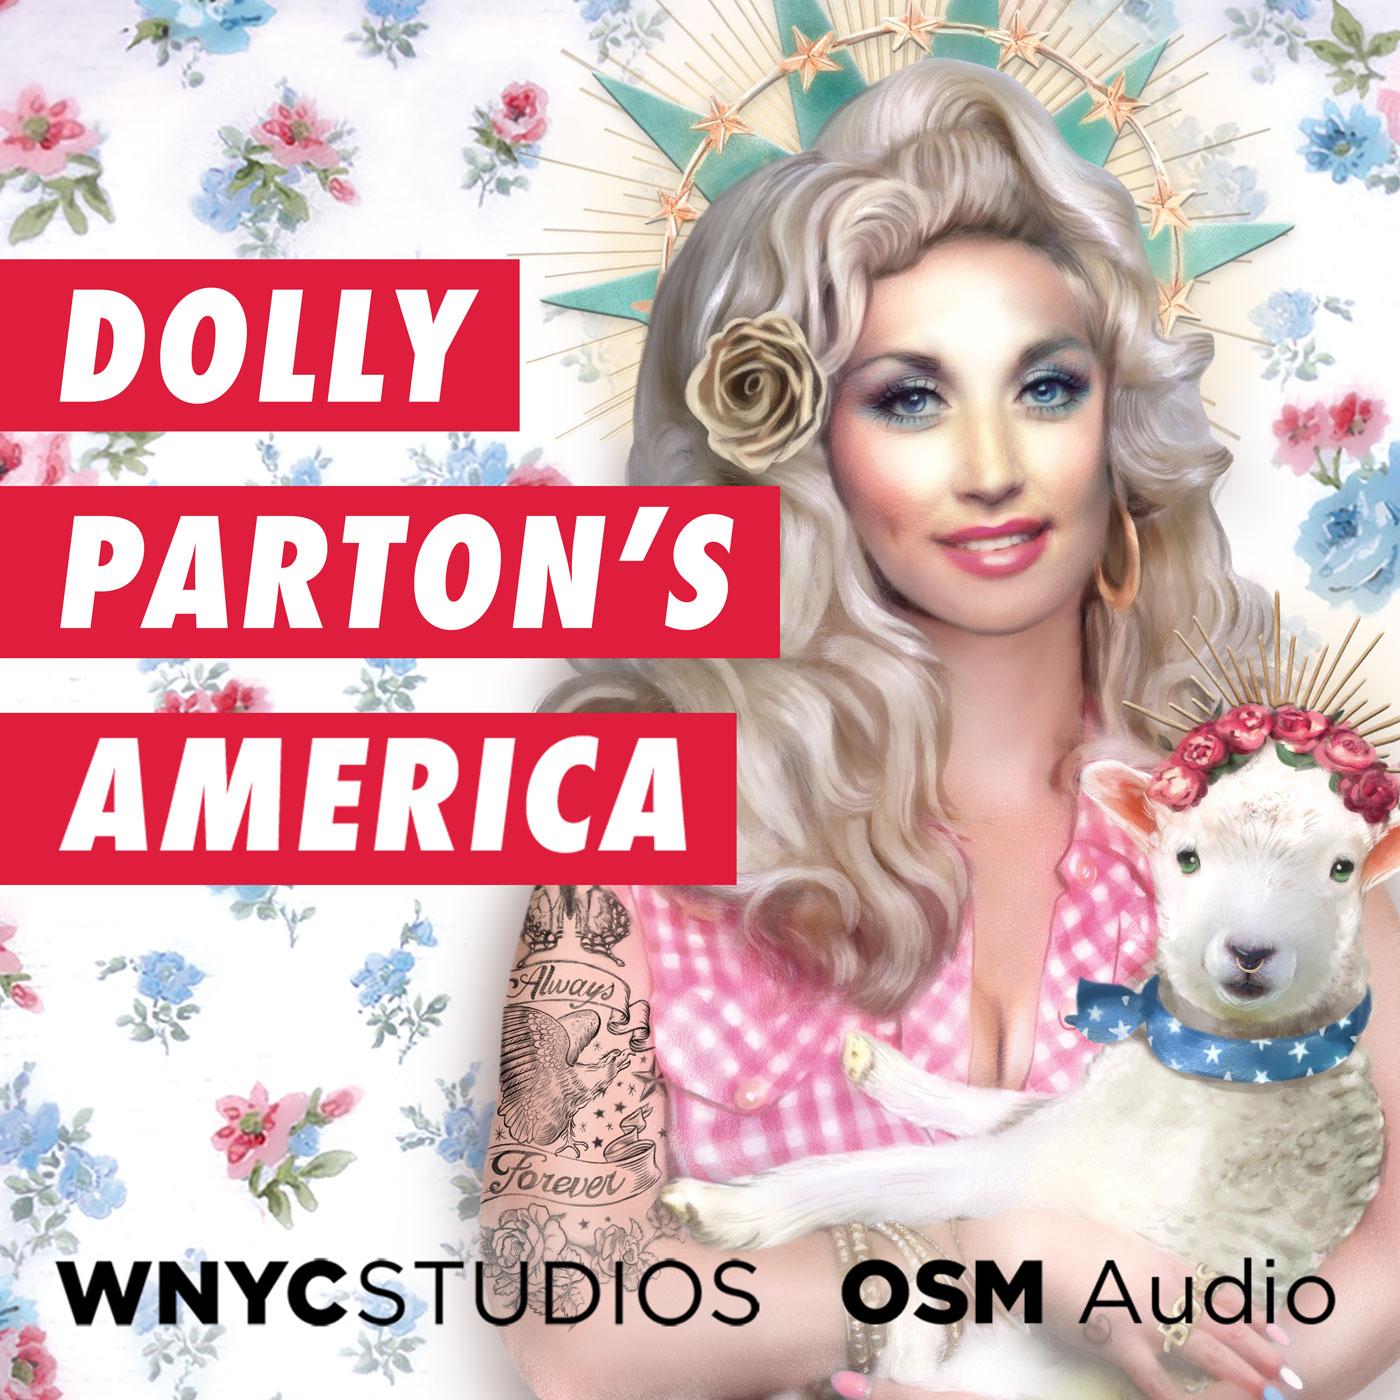 Dolly Parton's America Trailer
